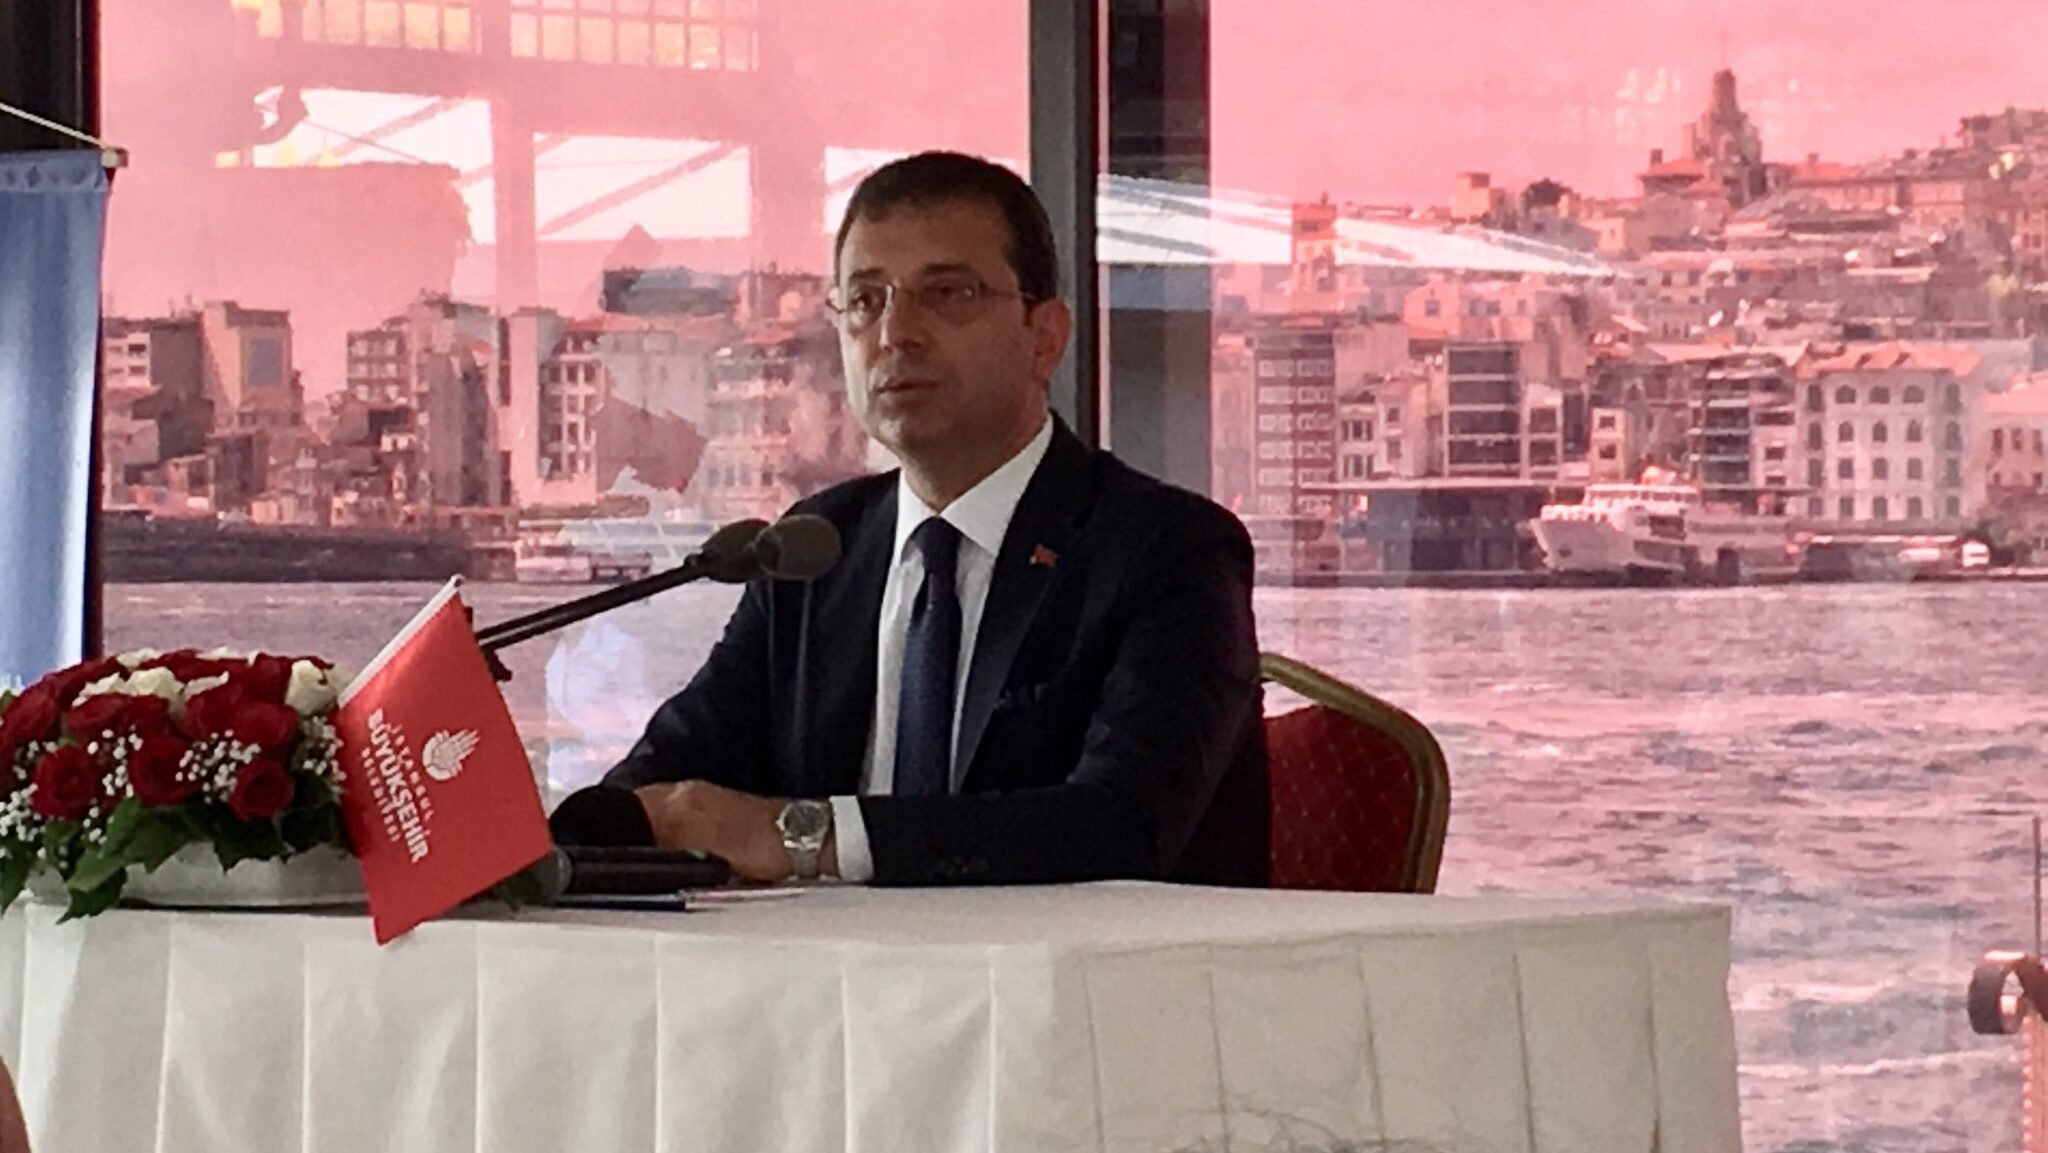 Battle for Istanbul: Mayor Imamoglu seeks to overturn Erdogan's grip in crucial local vote